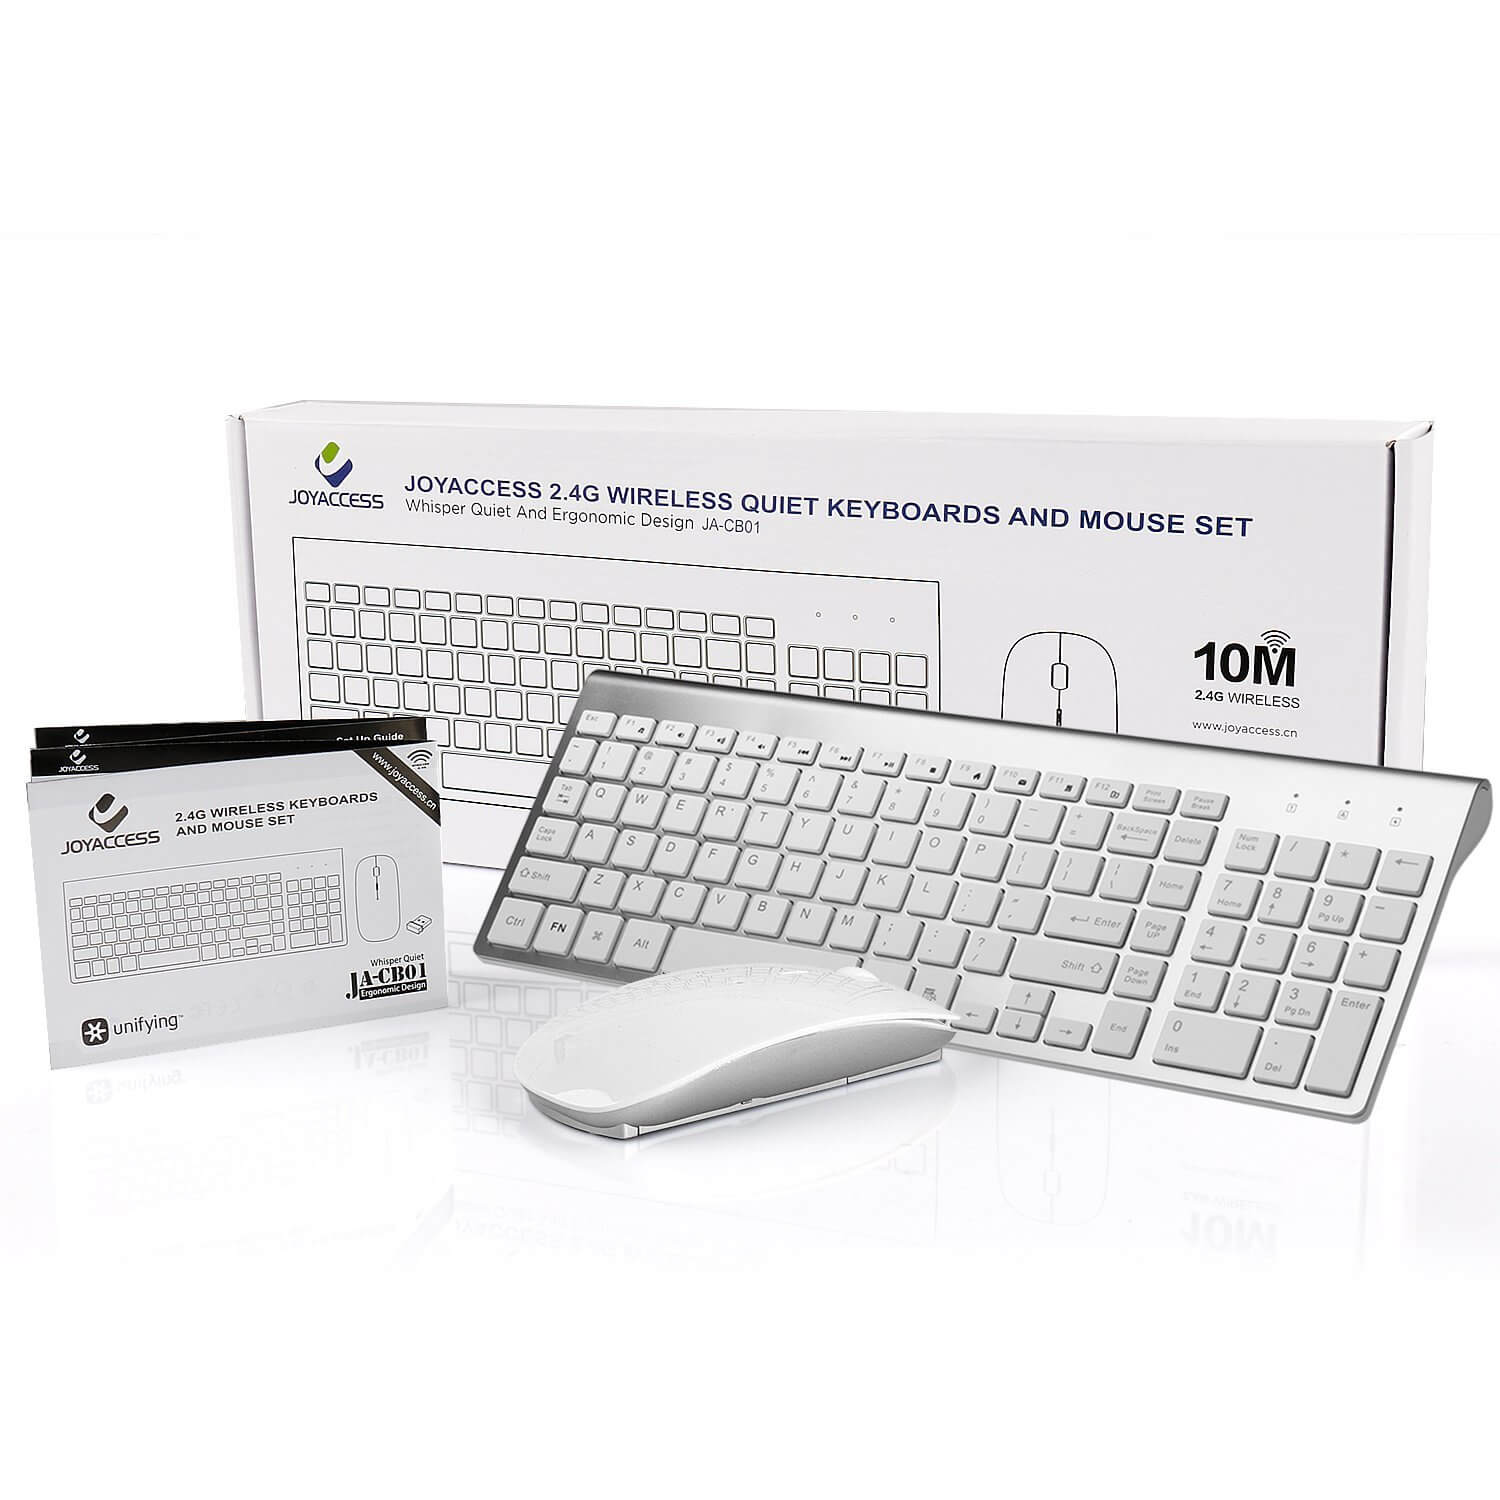 external keyboard for macbook pro amazon